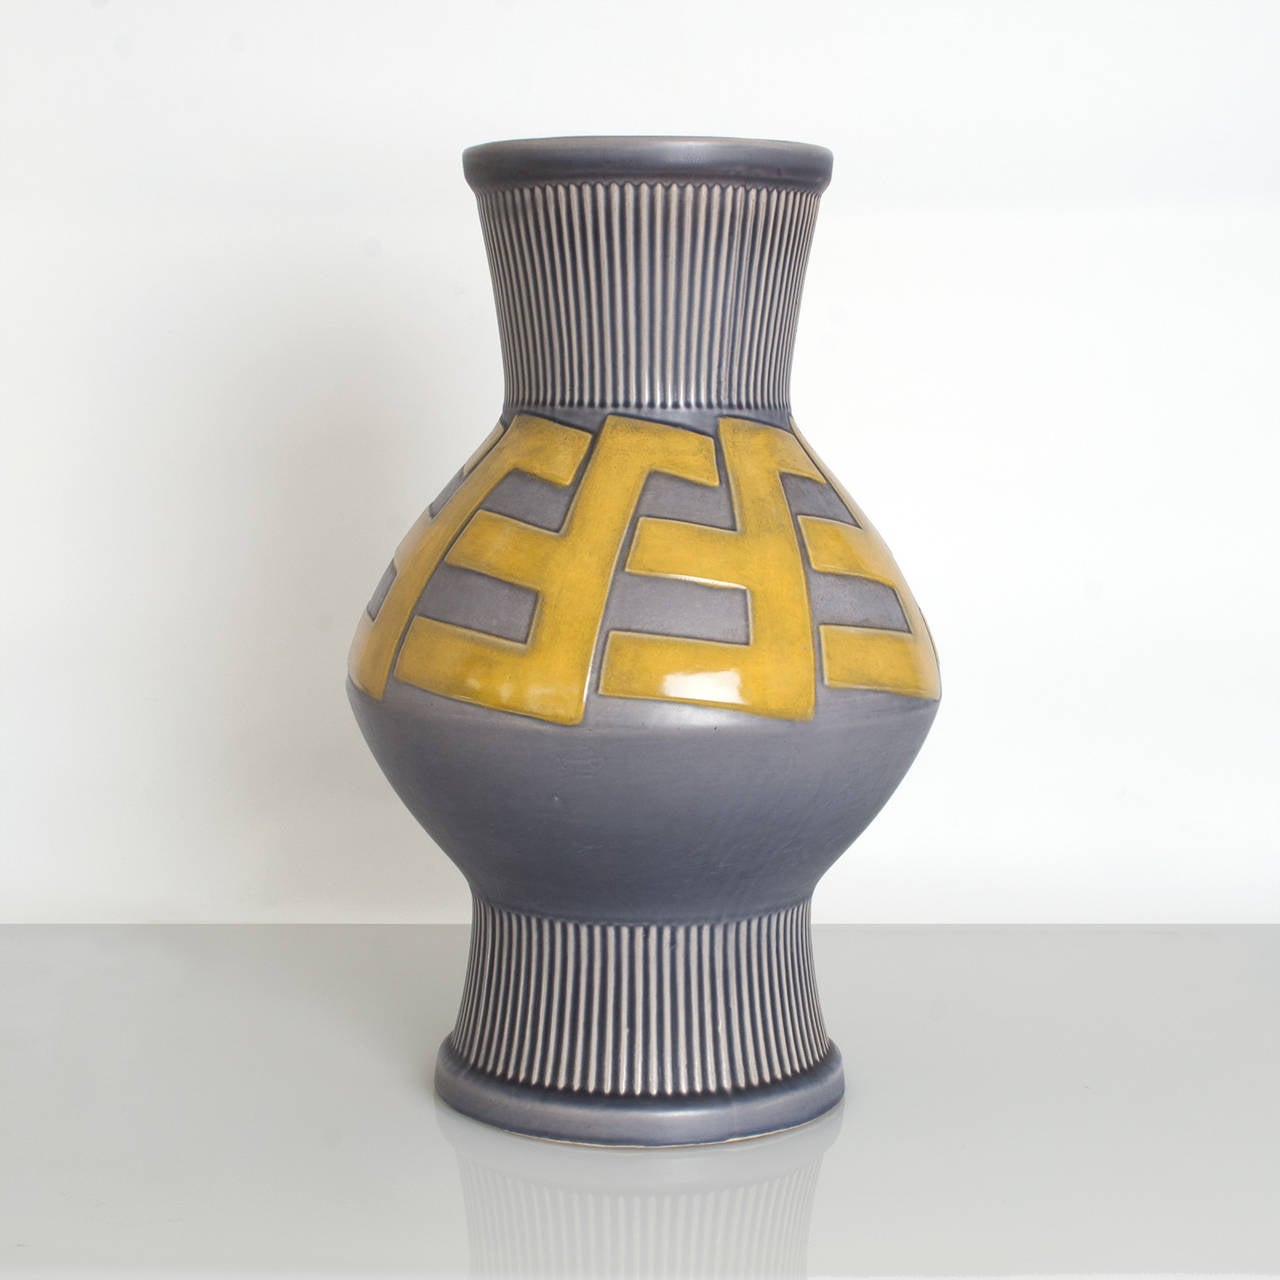 Huge Swedish Art Deco ceramic vase with a raised bold pattern in a golden glaze on a grayish blue background. Designed by artist Ewald Dahlskog for Bo Fajans circa 1930's. Height 17.5